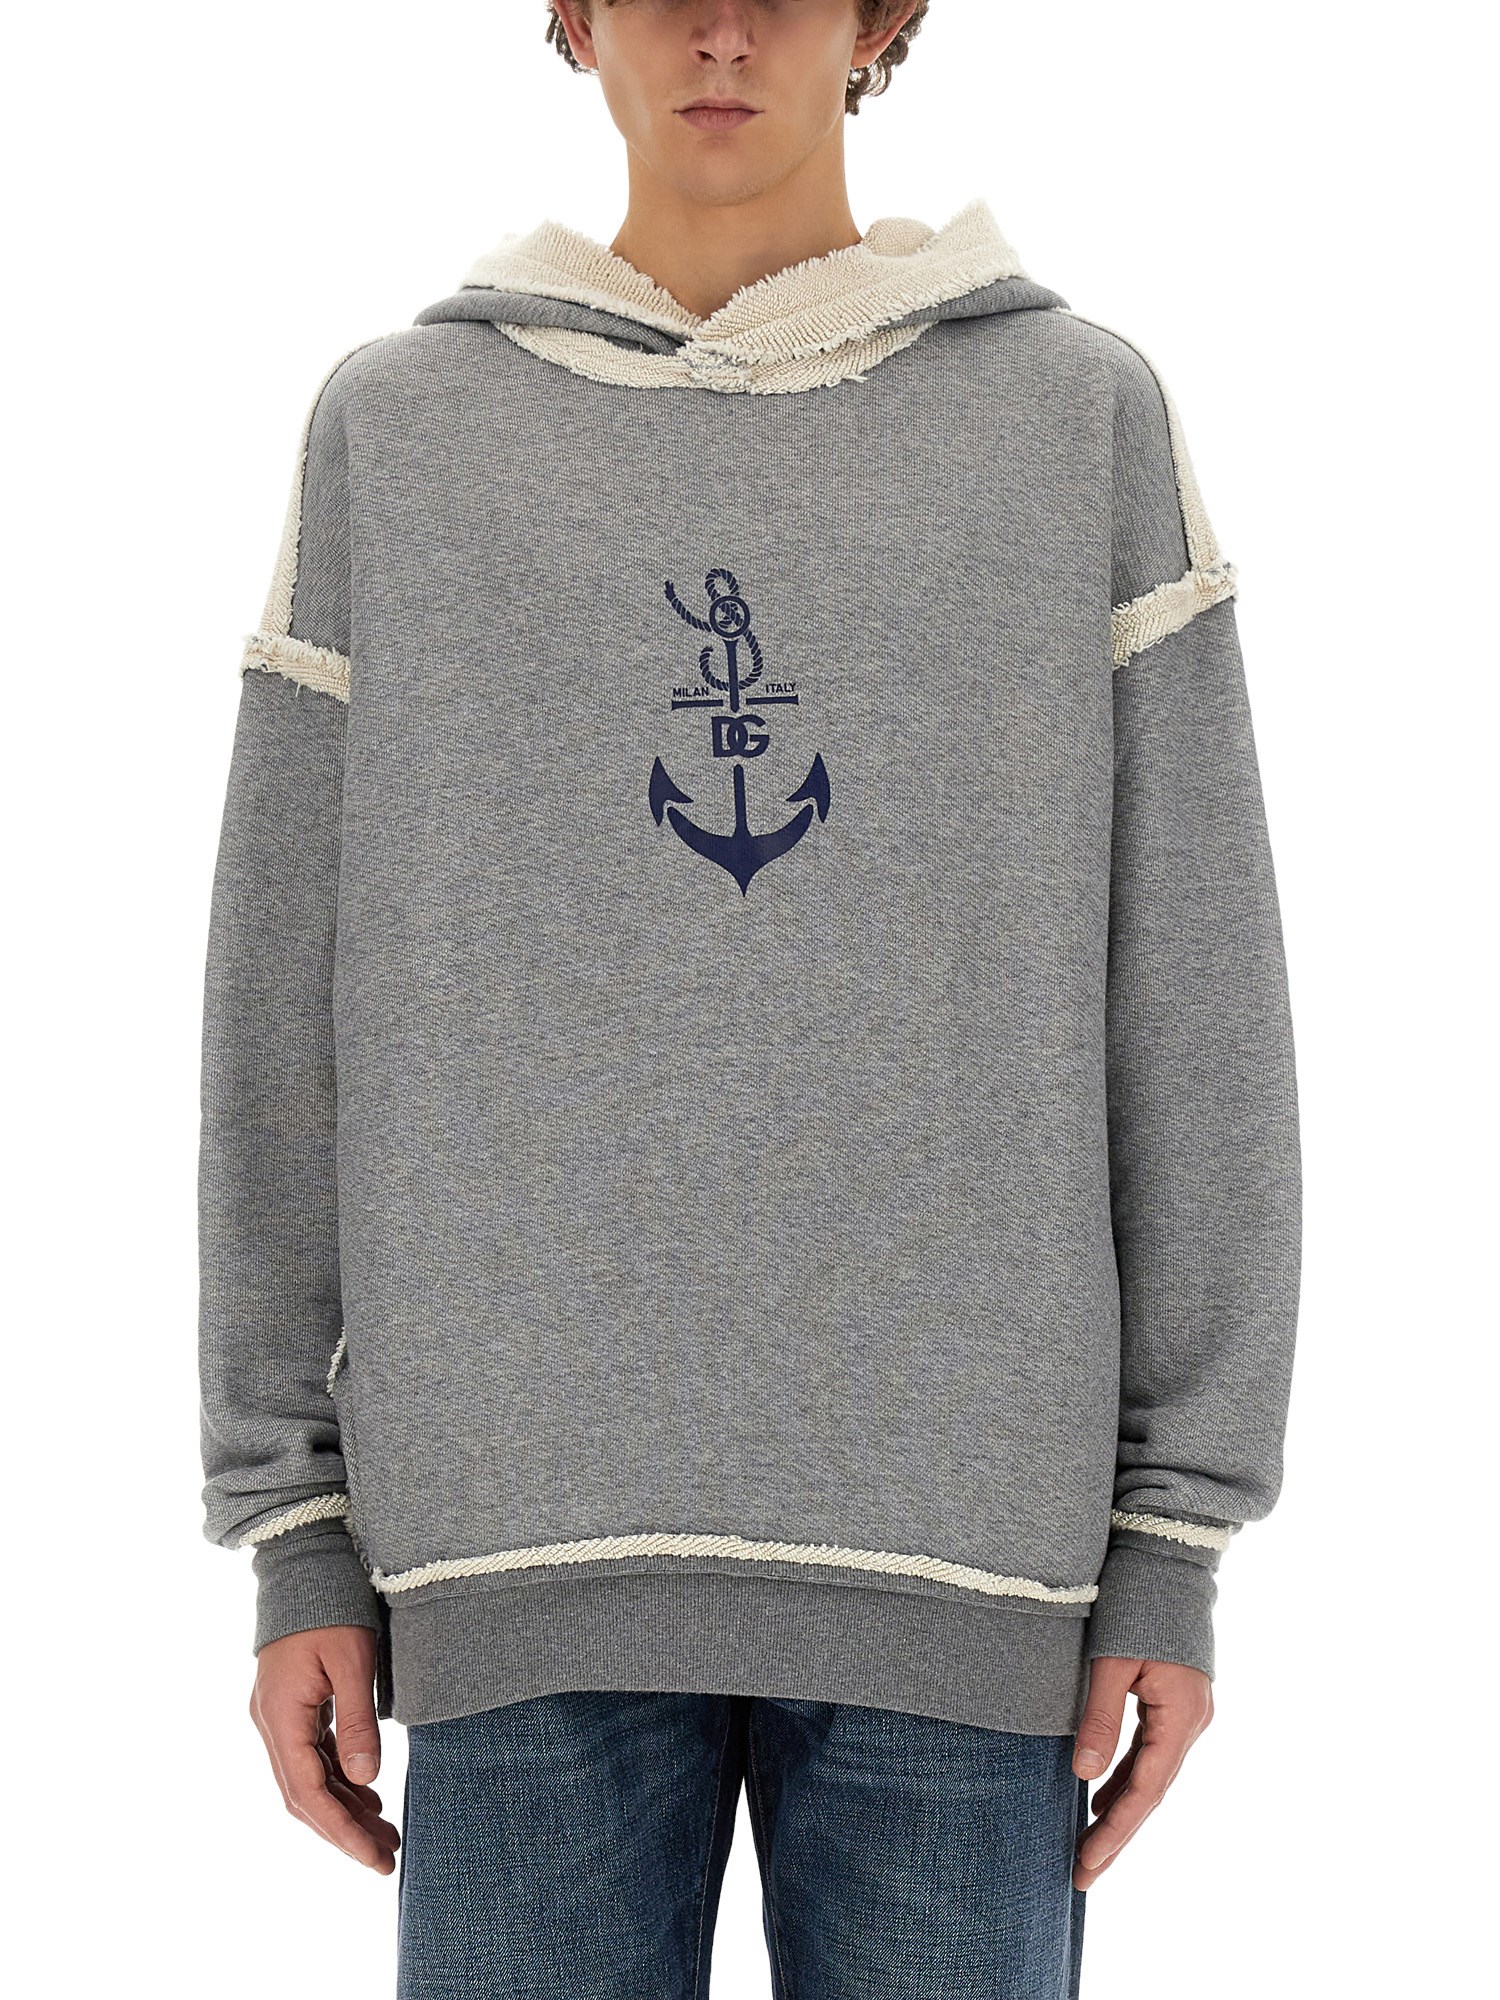 dolce & gabbana sweatshirt with navy print